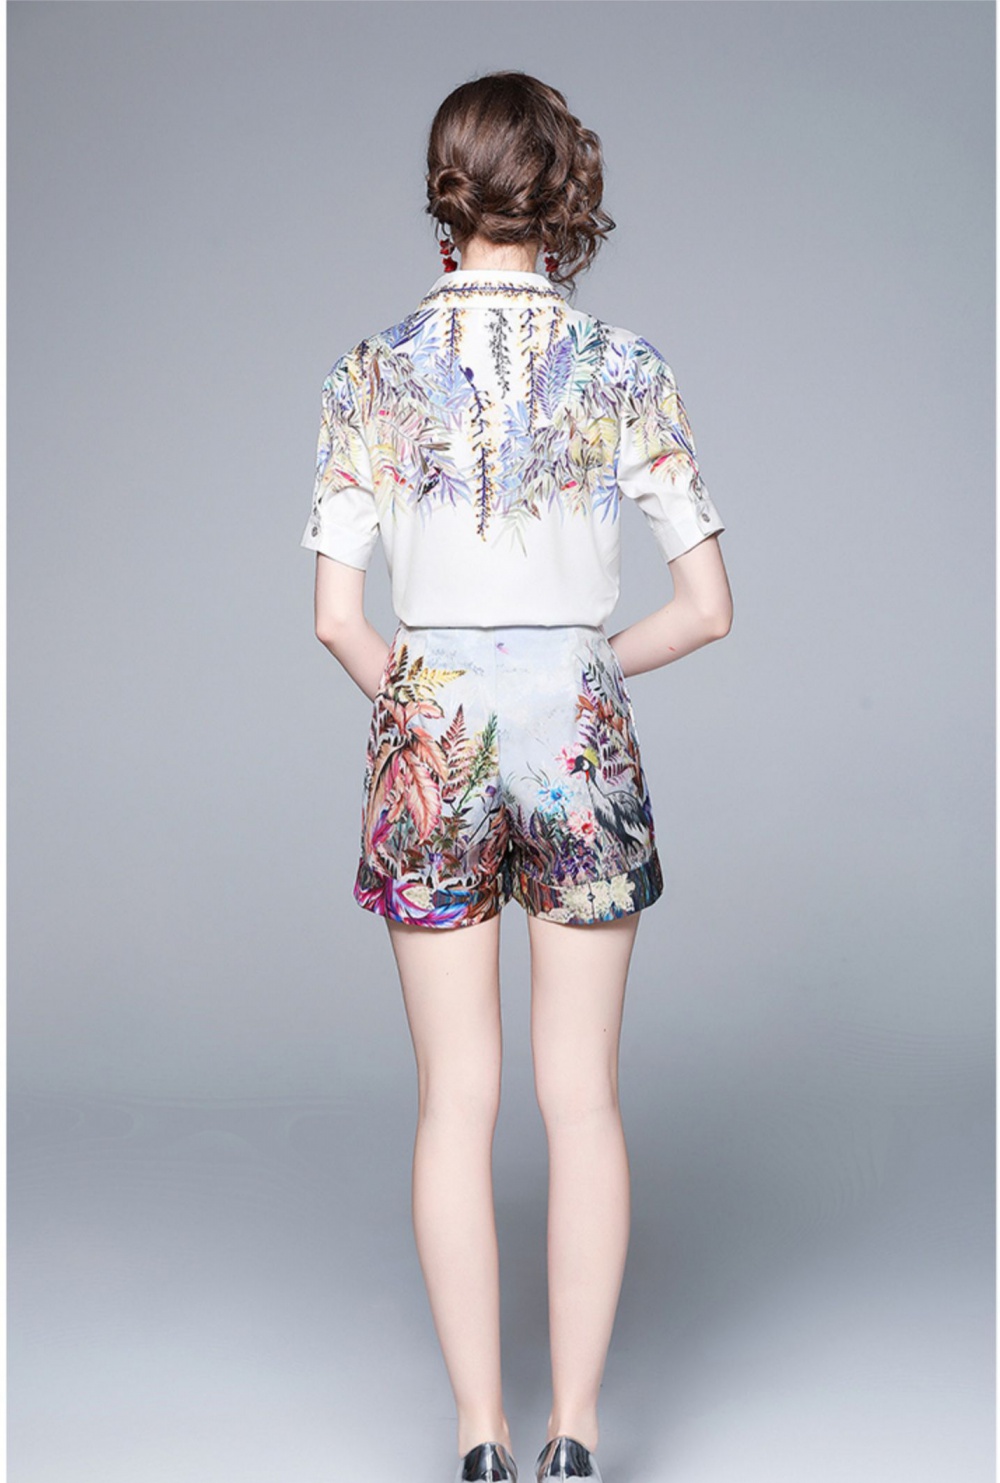 Fashion printing pants ladies shorts 2pcs set for women